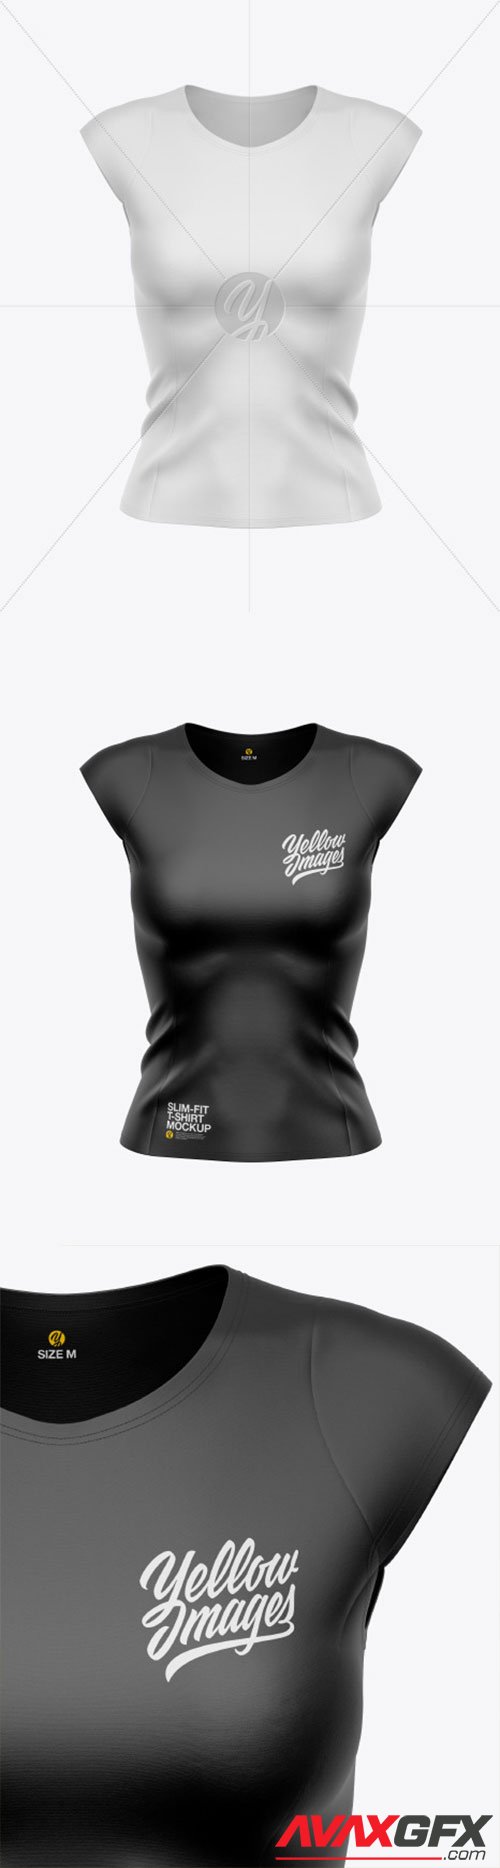 Women’s Slim-Fit T-Shirt Mockup 49131